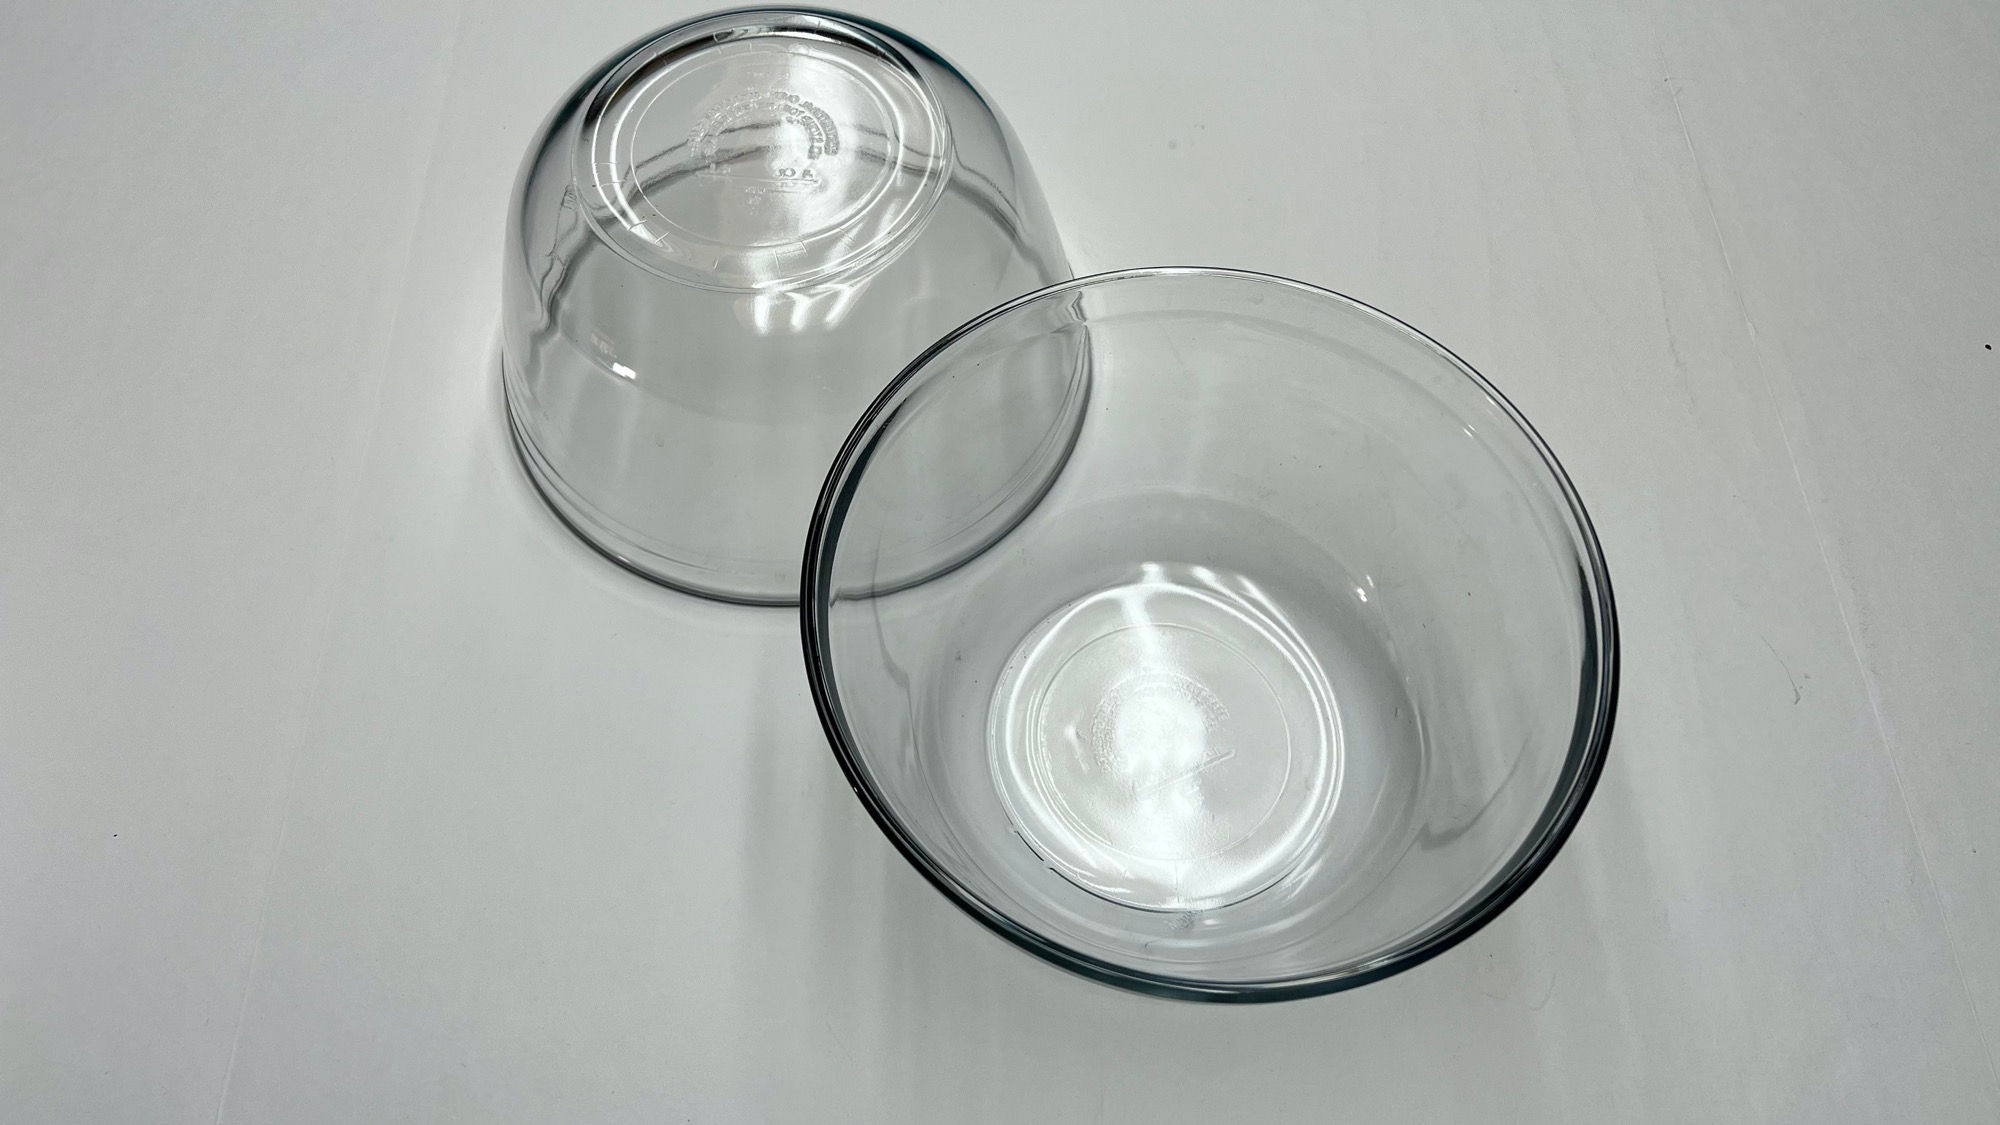 https://www.eatlife.net/want/images/anchor-hocking-glass-mixing-bowls-4-quart.jpg